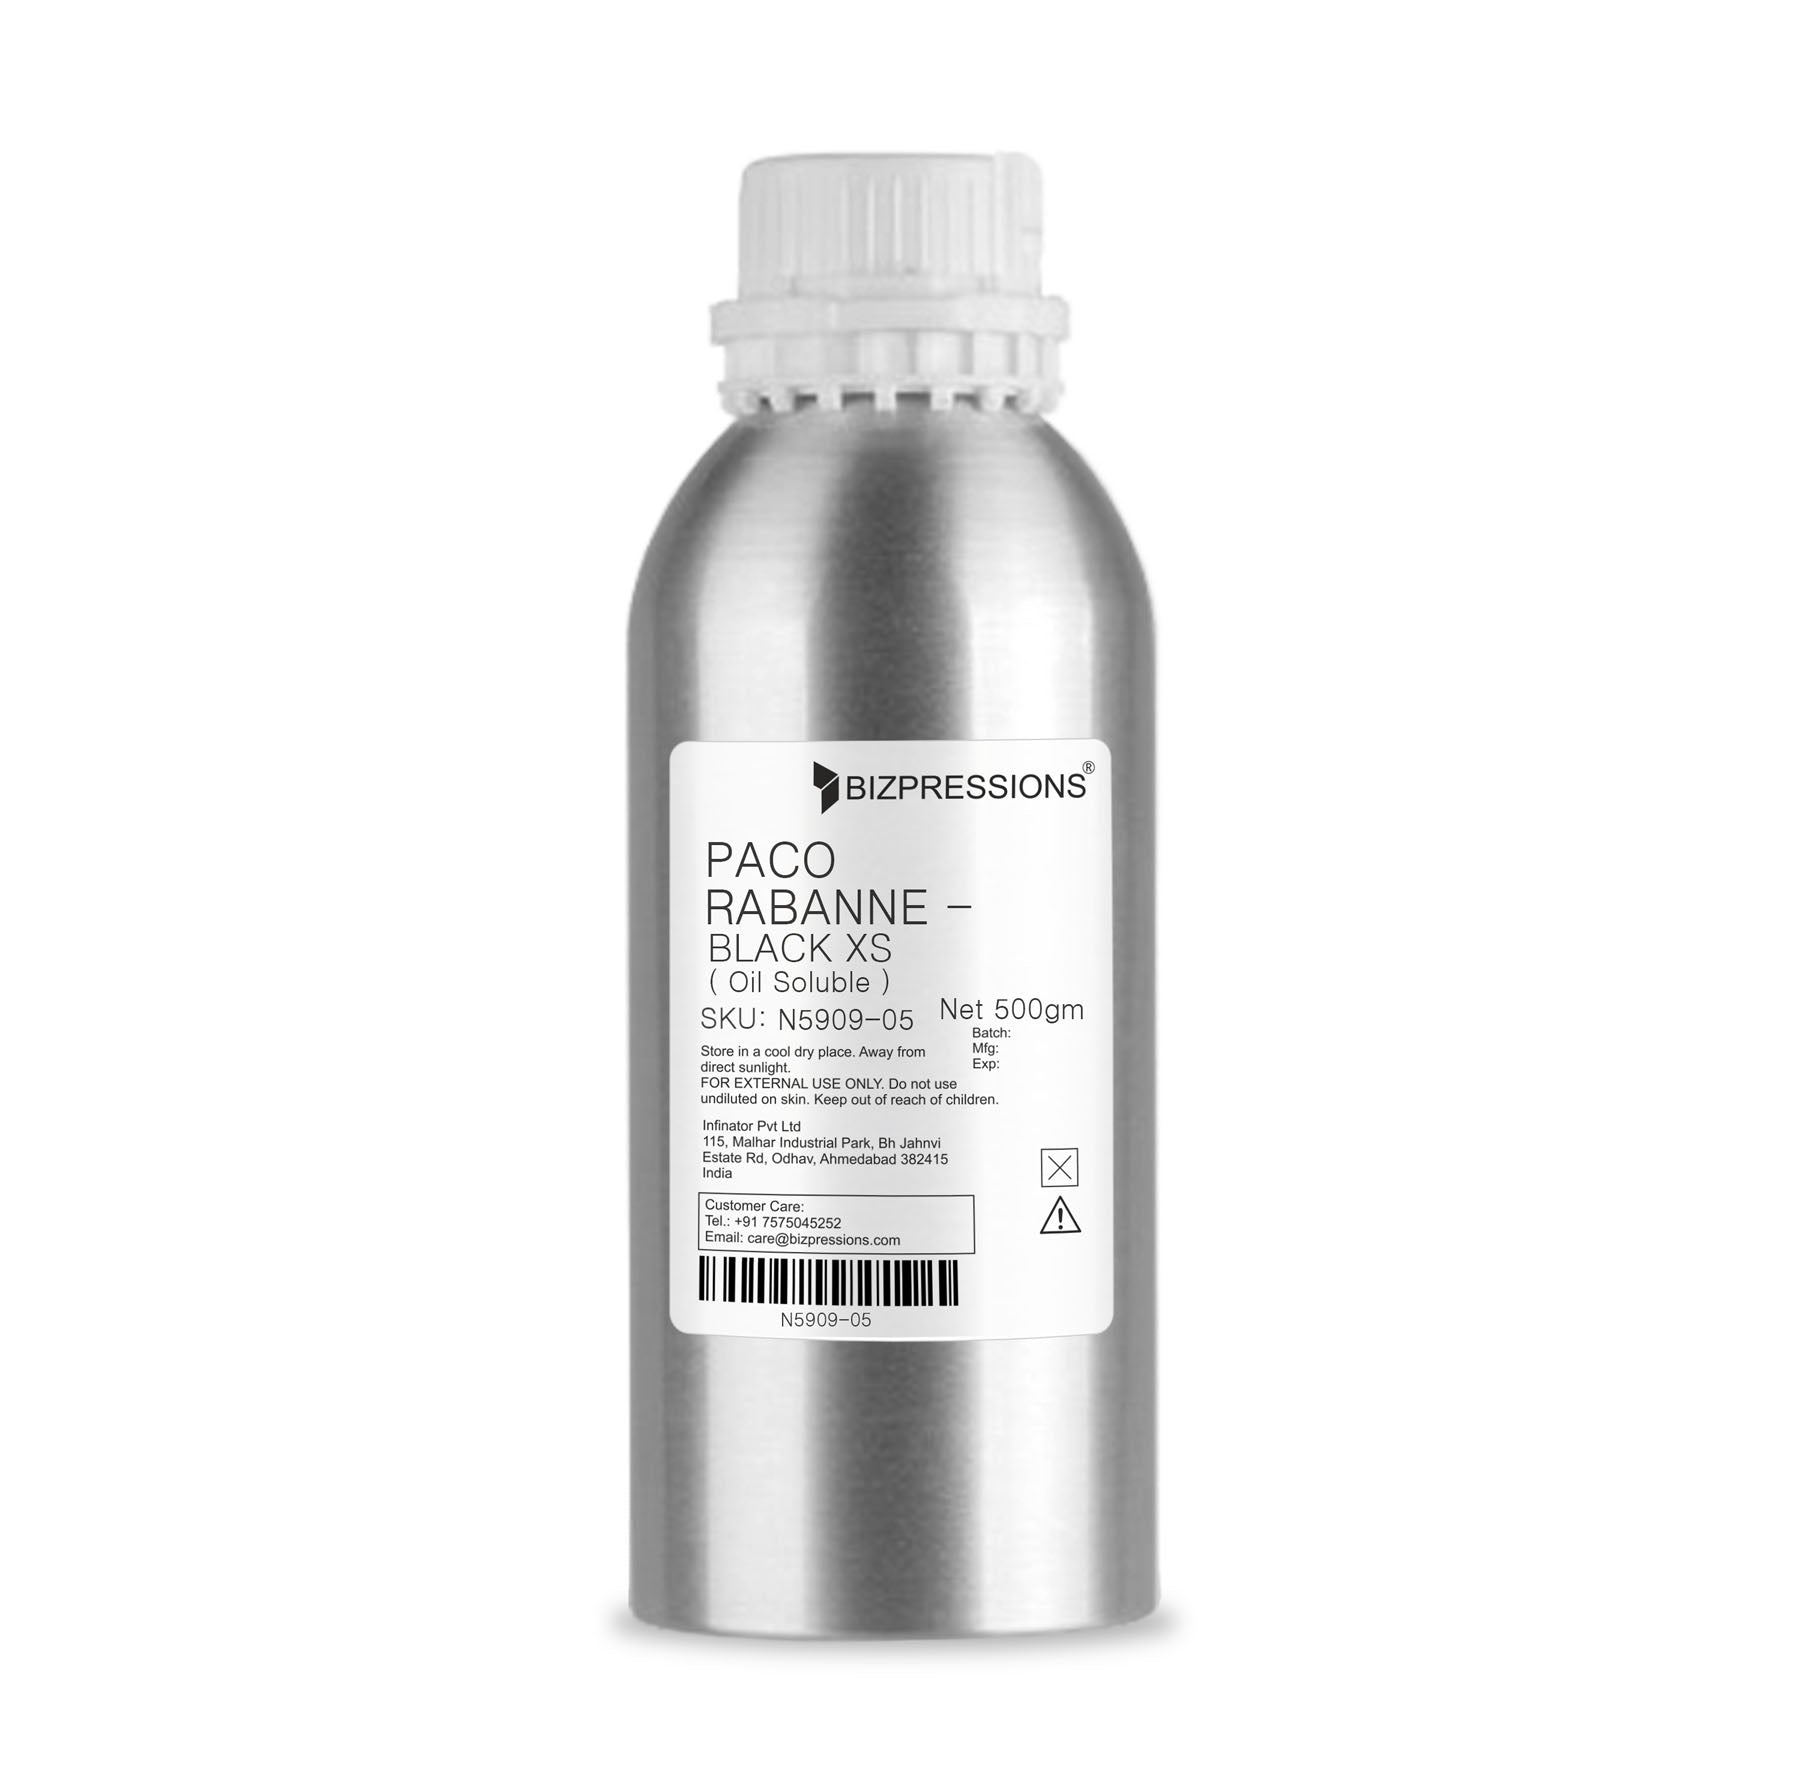 PACO RABANNE - BLACK XS - Fragrance ( Oil Soluble ) - 500 gm